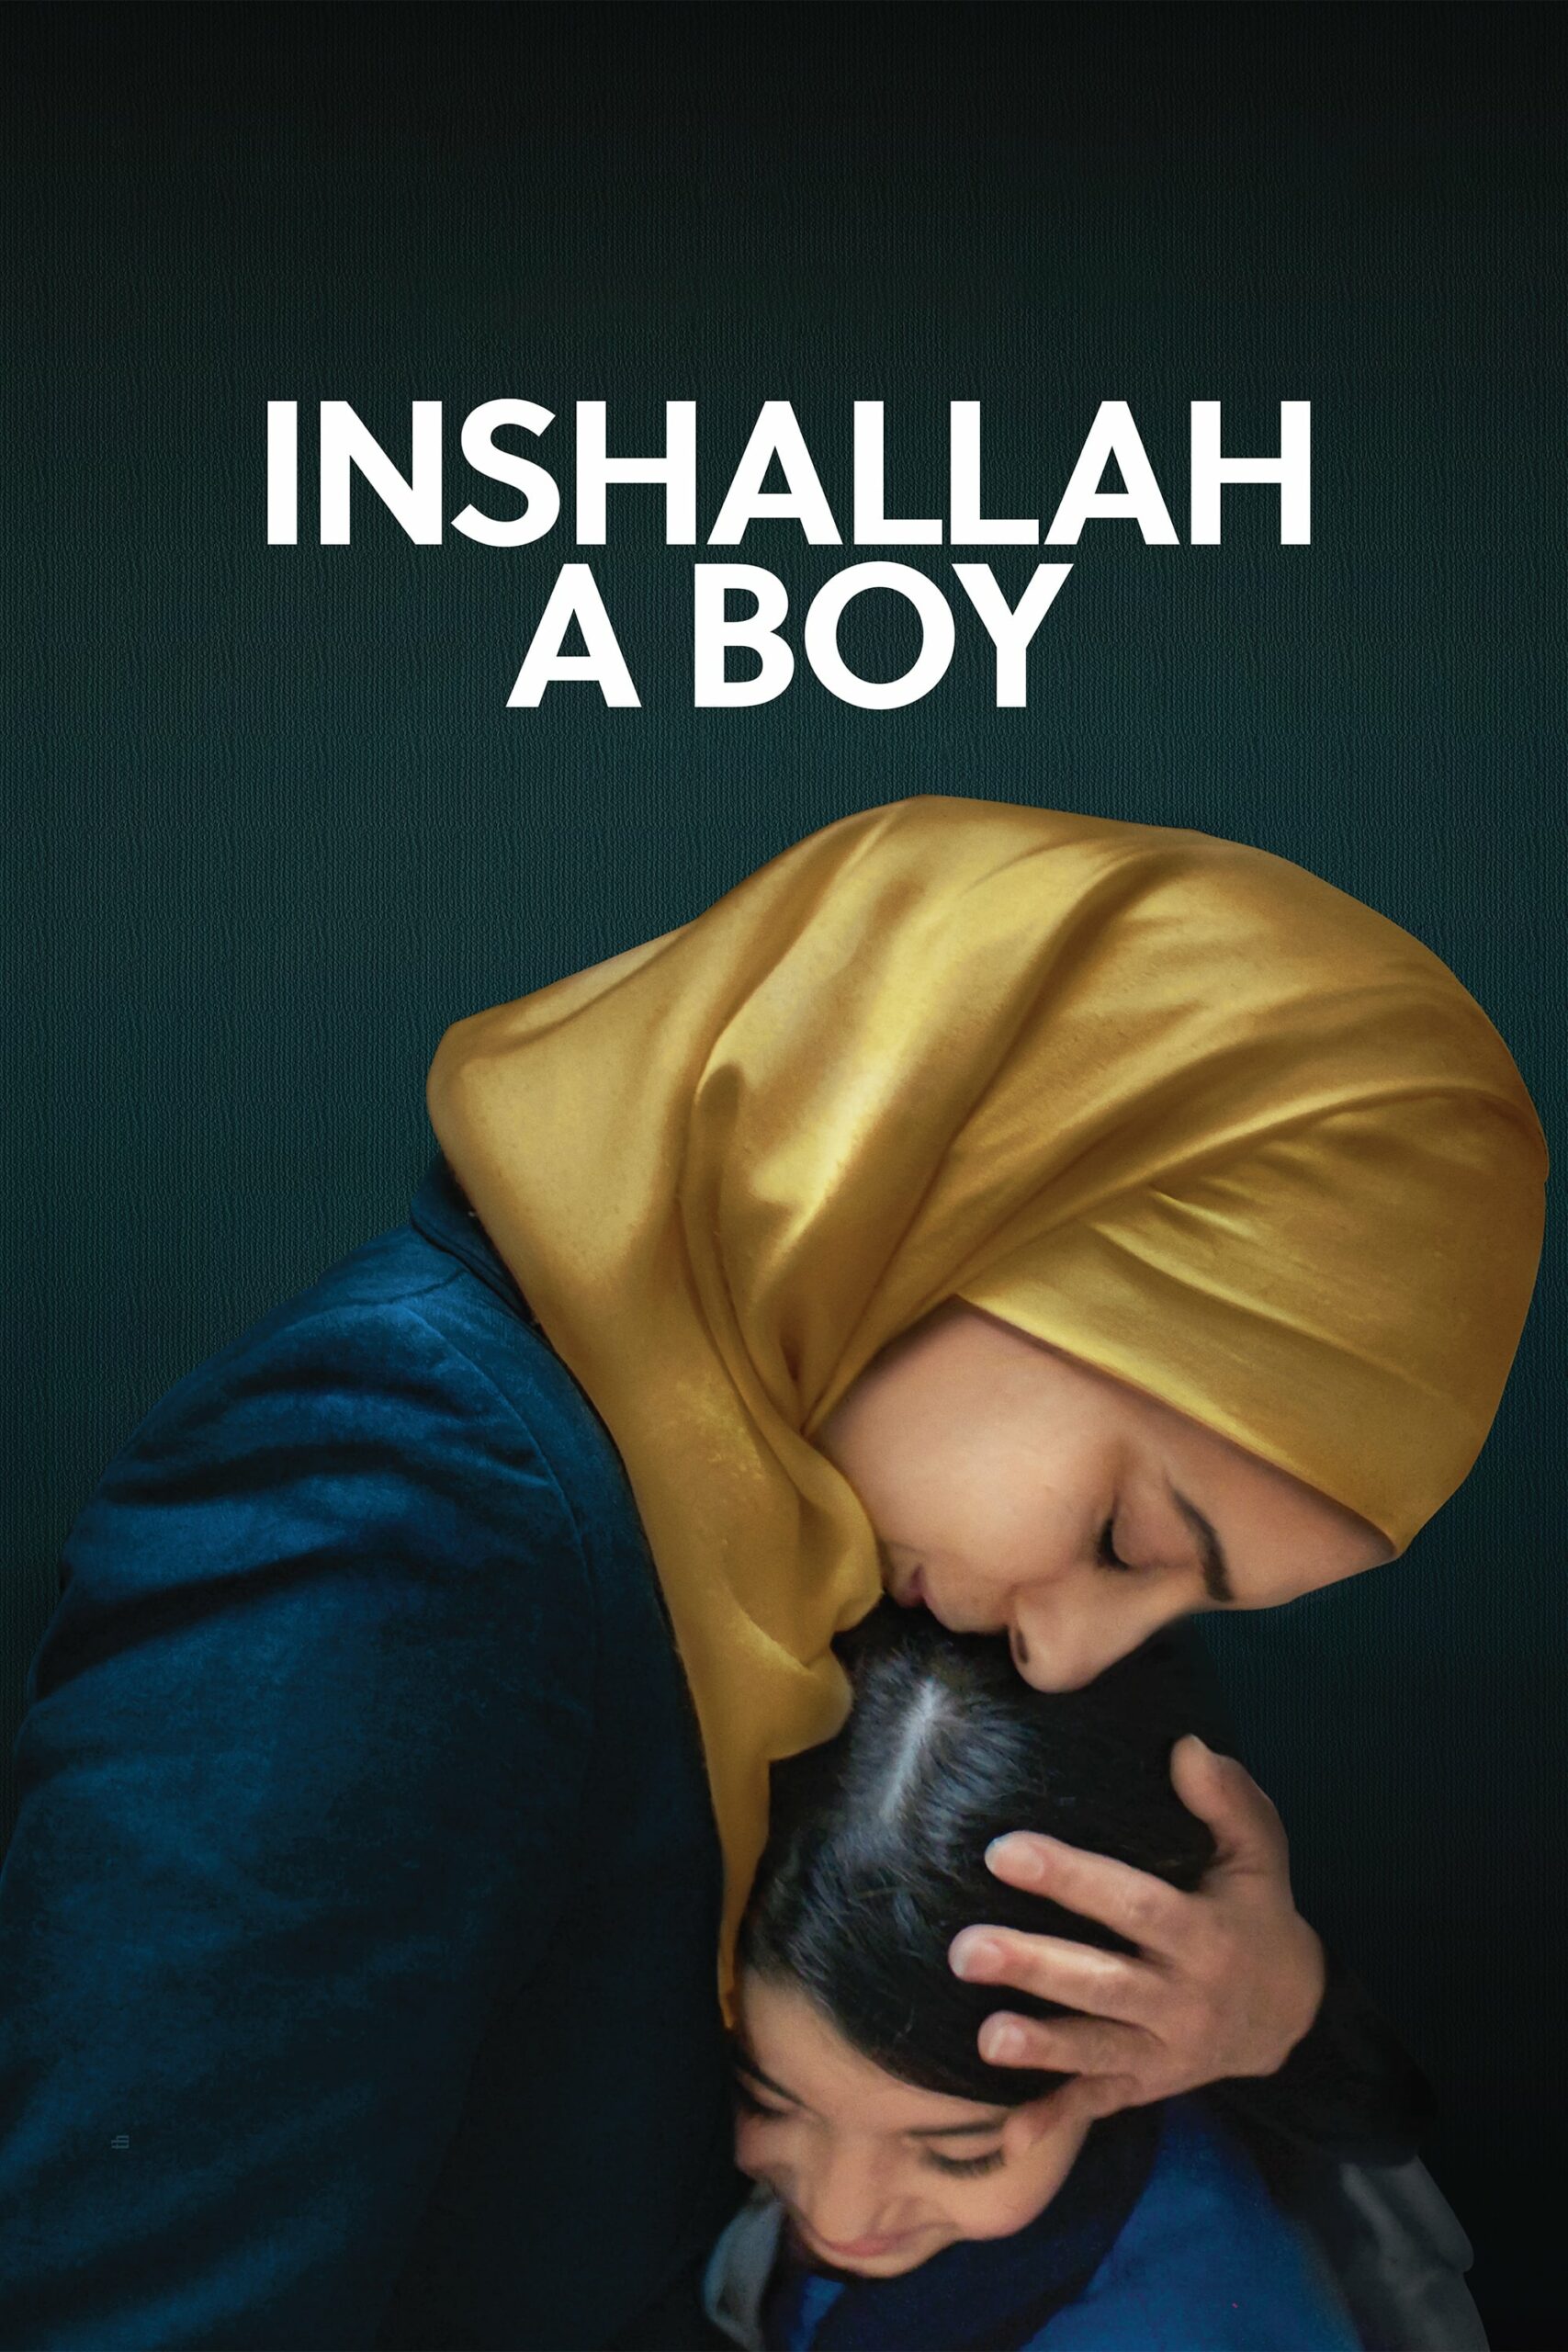 Inshallah a boy